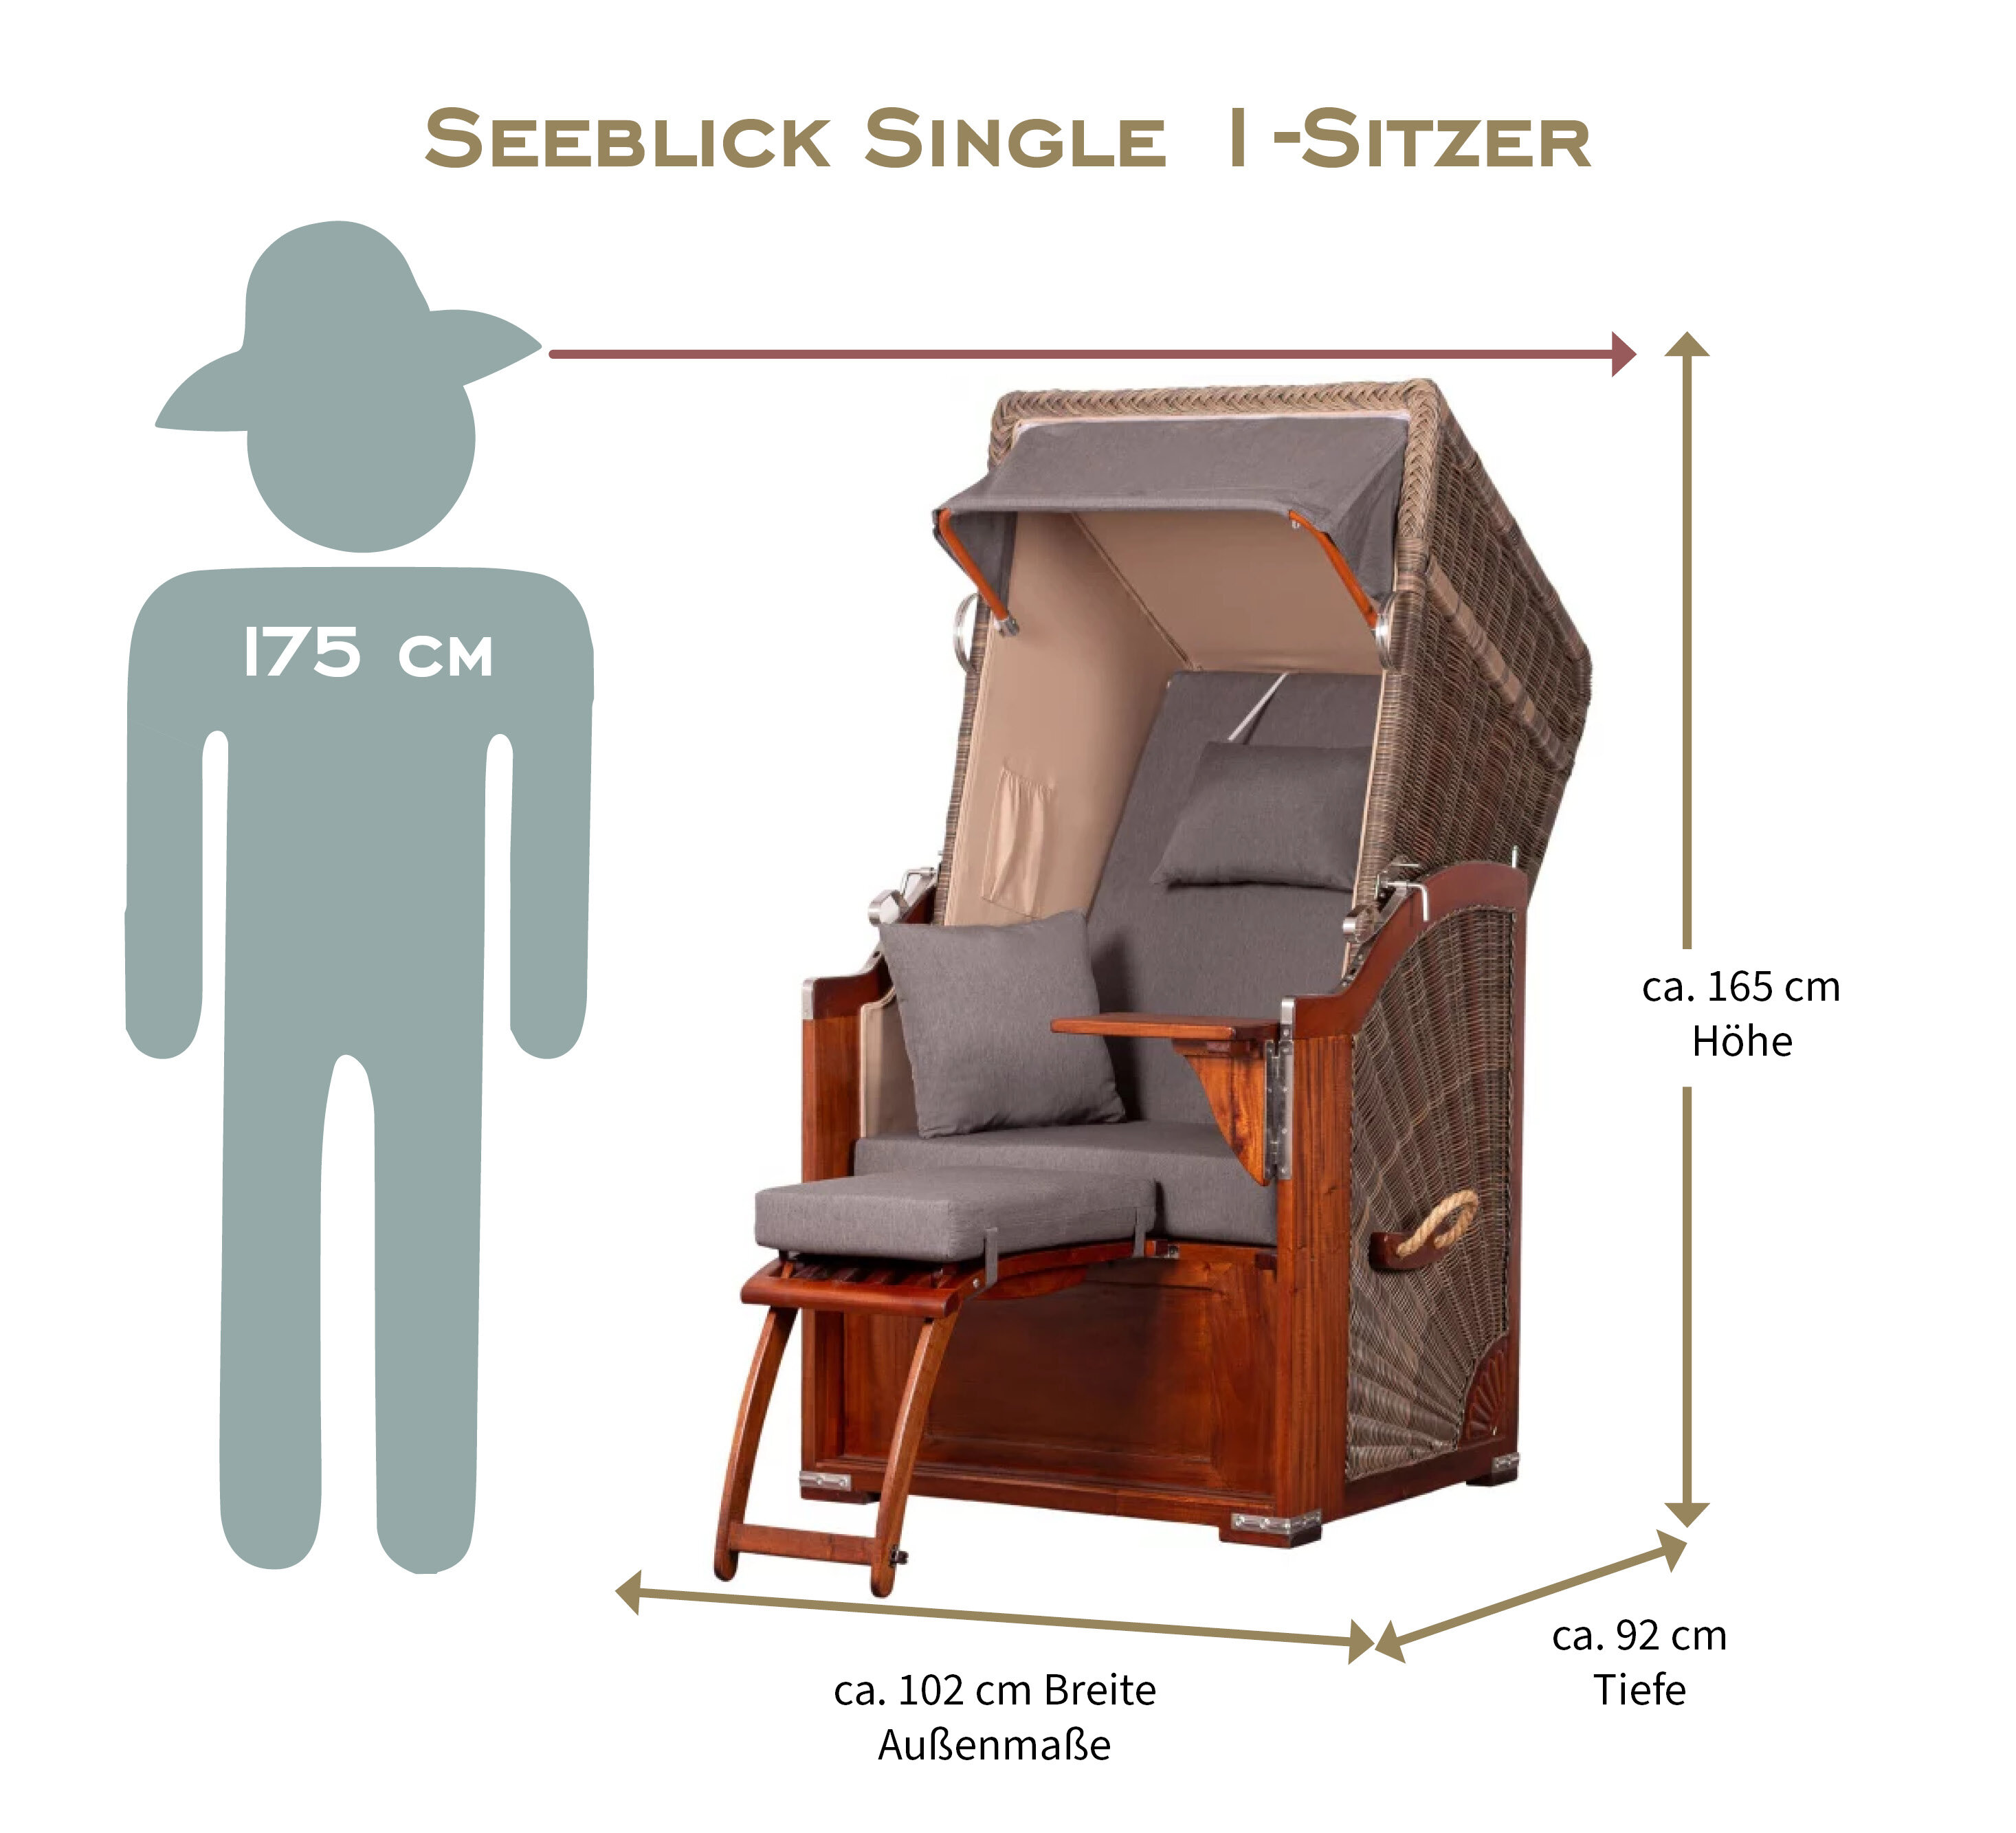 Seeblick 1-Sitzer